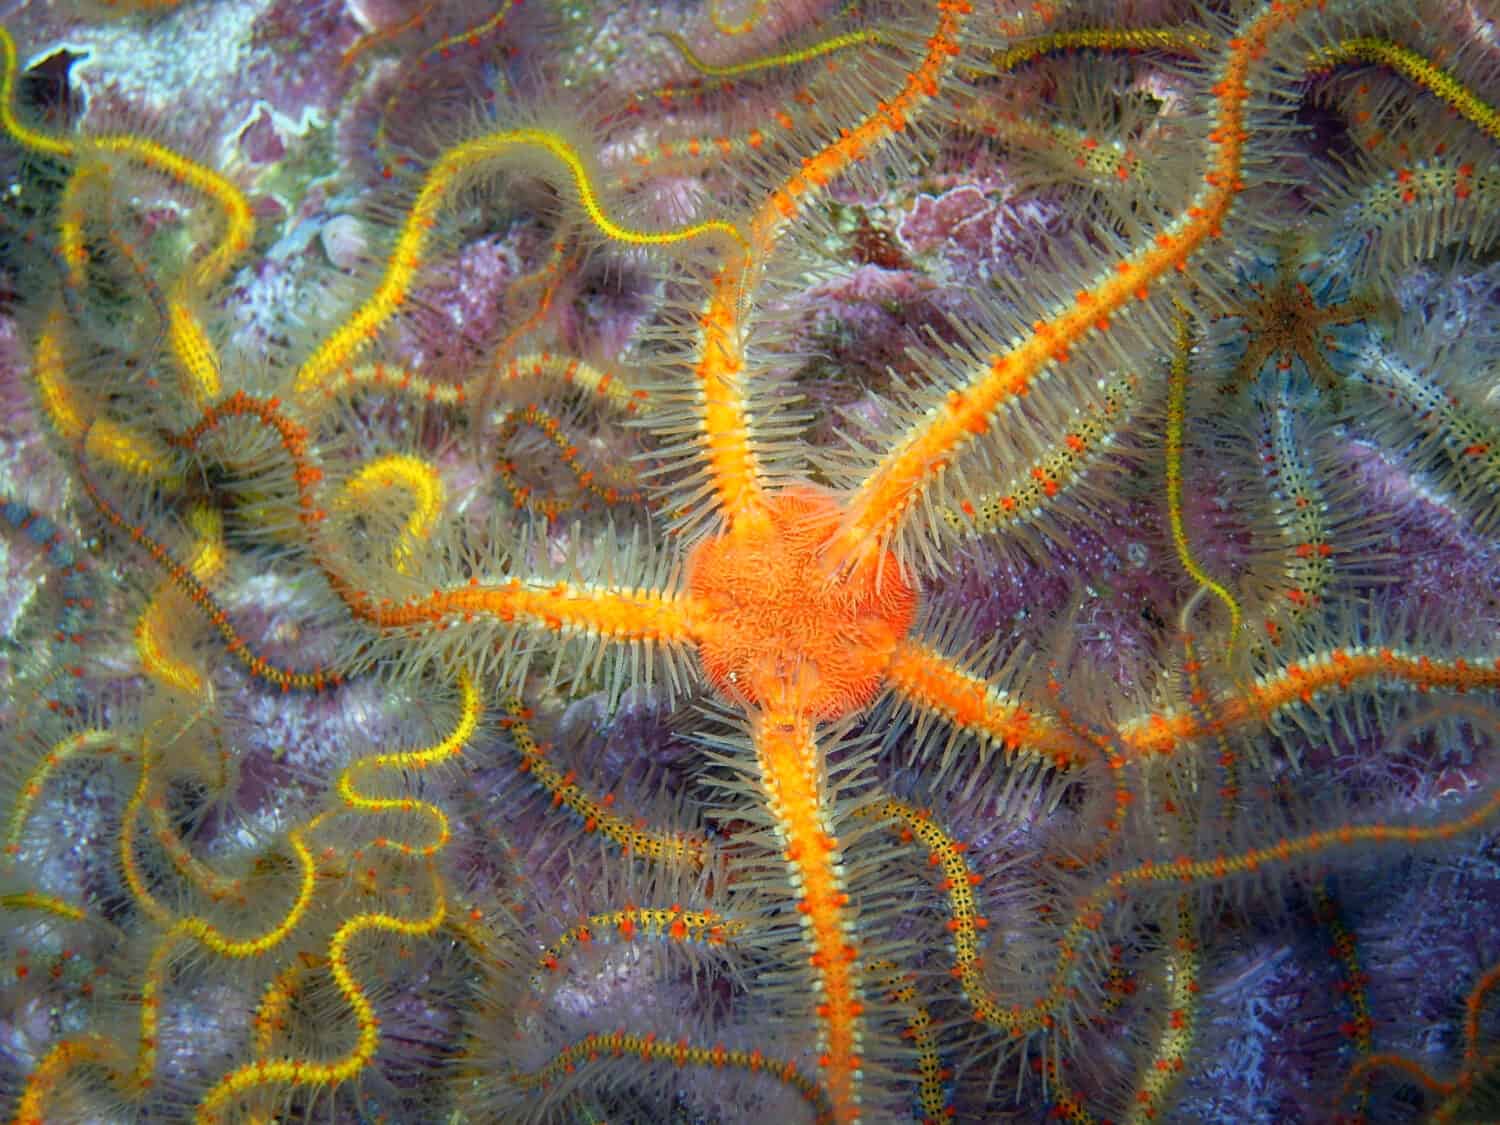 new brittle star species: over 2,100 already exist!